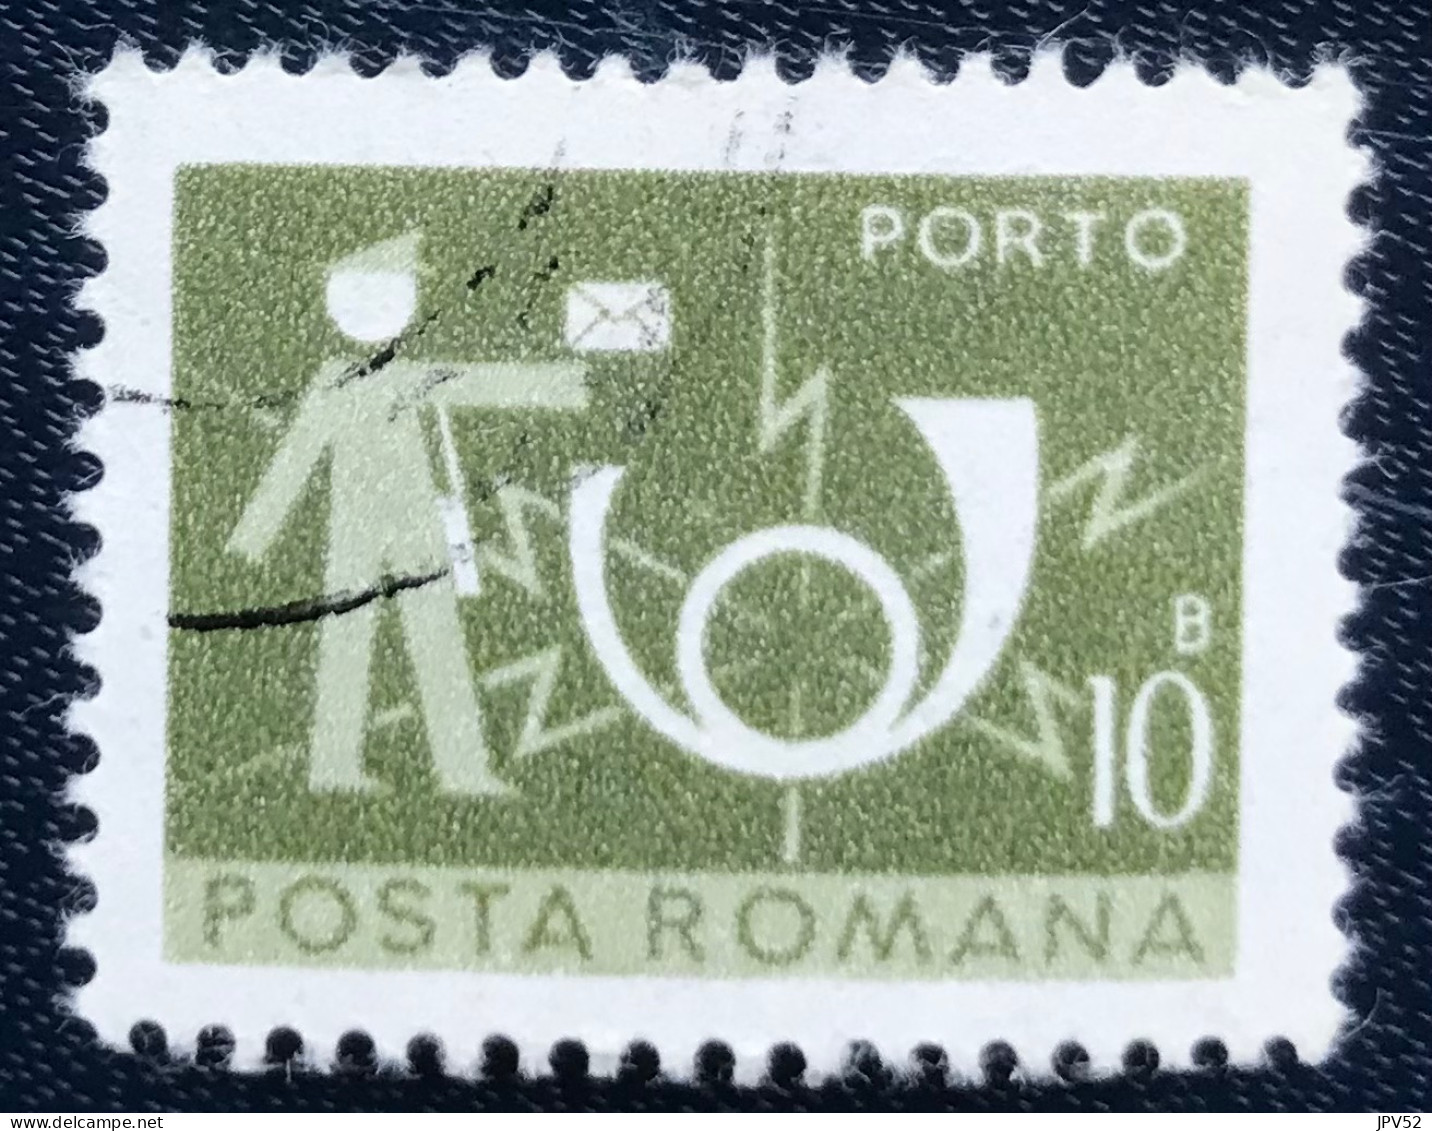 Romana - Roemenië - C14/54 - 1974 - (°)used - Michel 120 - Postbode & Posthoorn - Postage Due